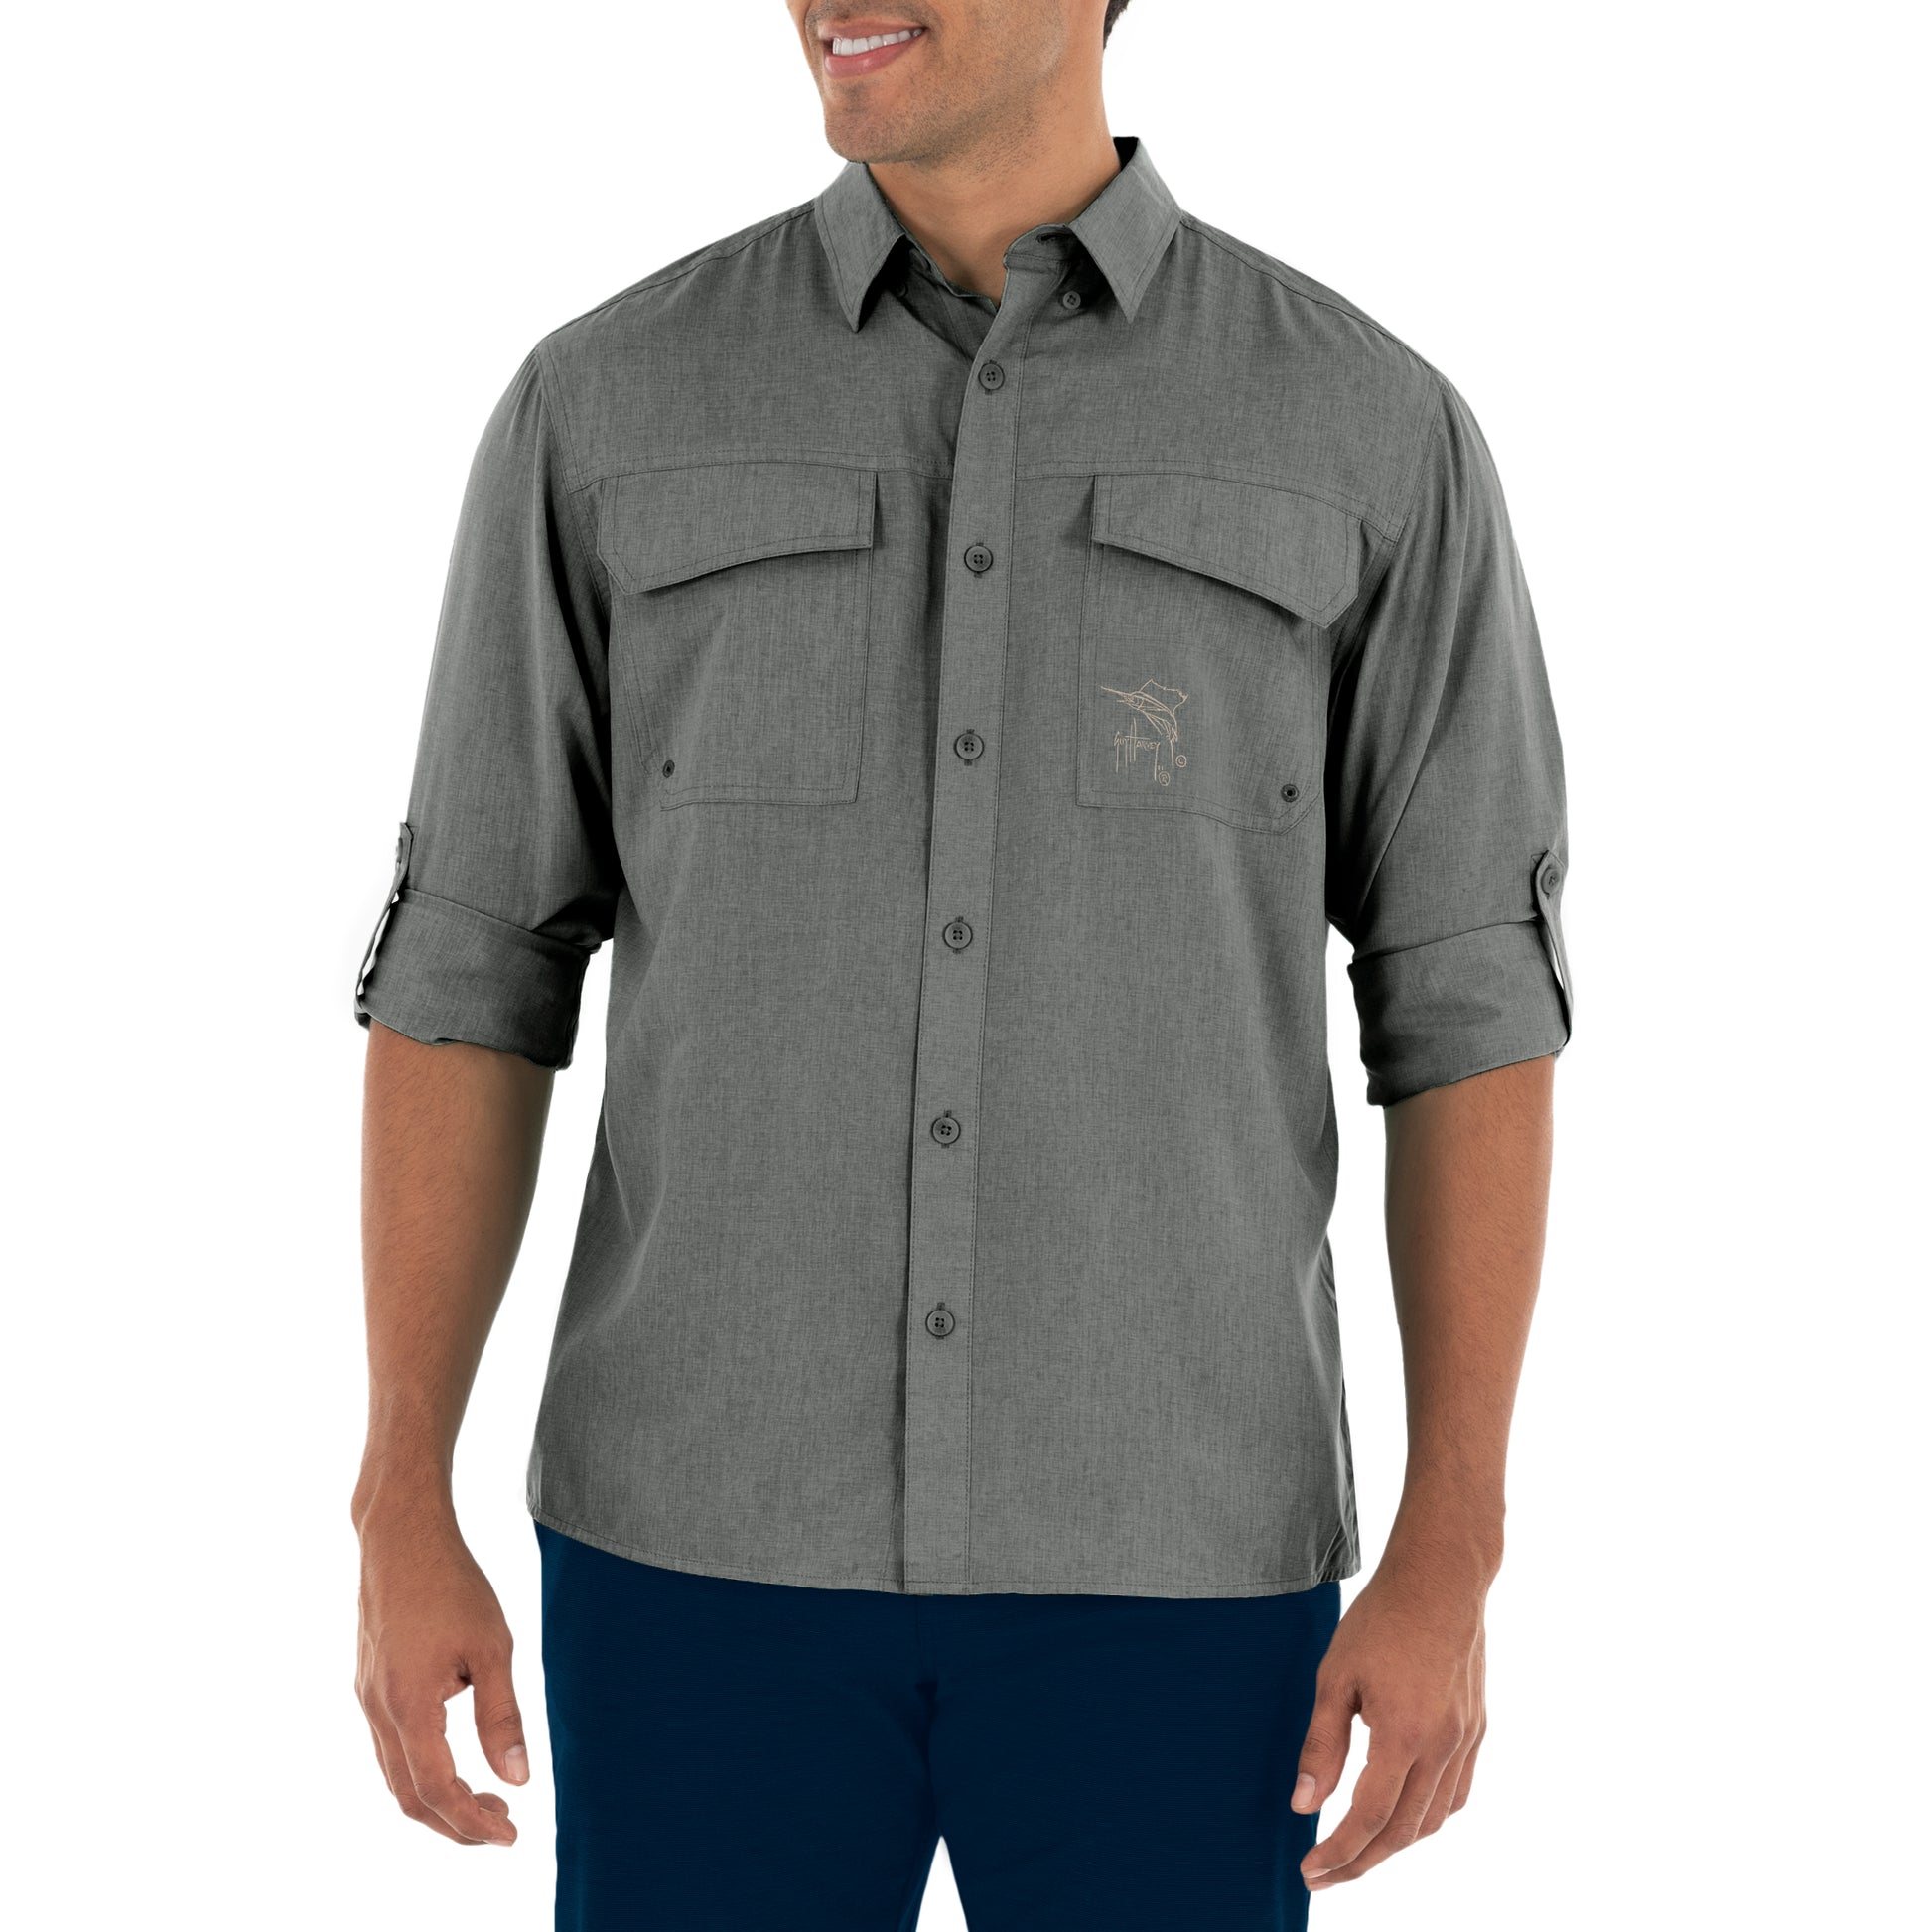 Men's Long Sleeve Heather Textured Cationic Grey Fishing Shirt View 4